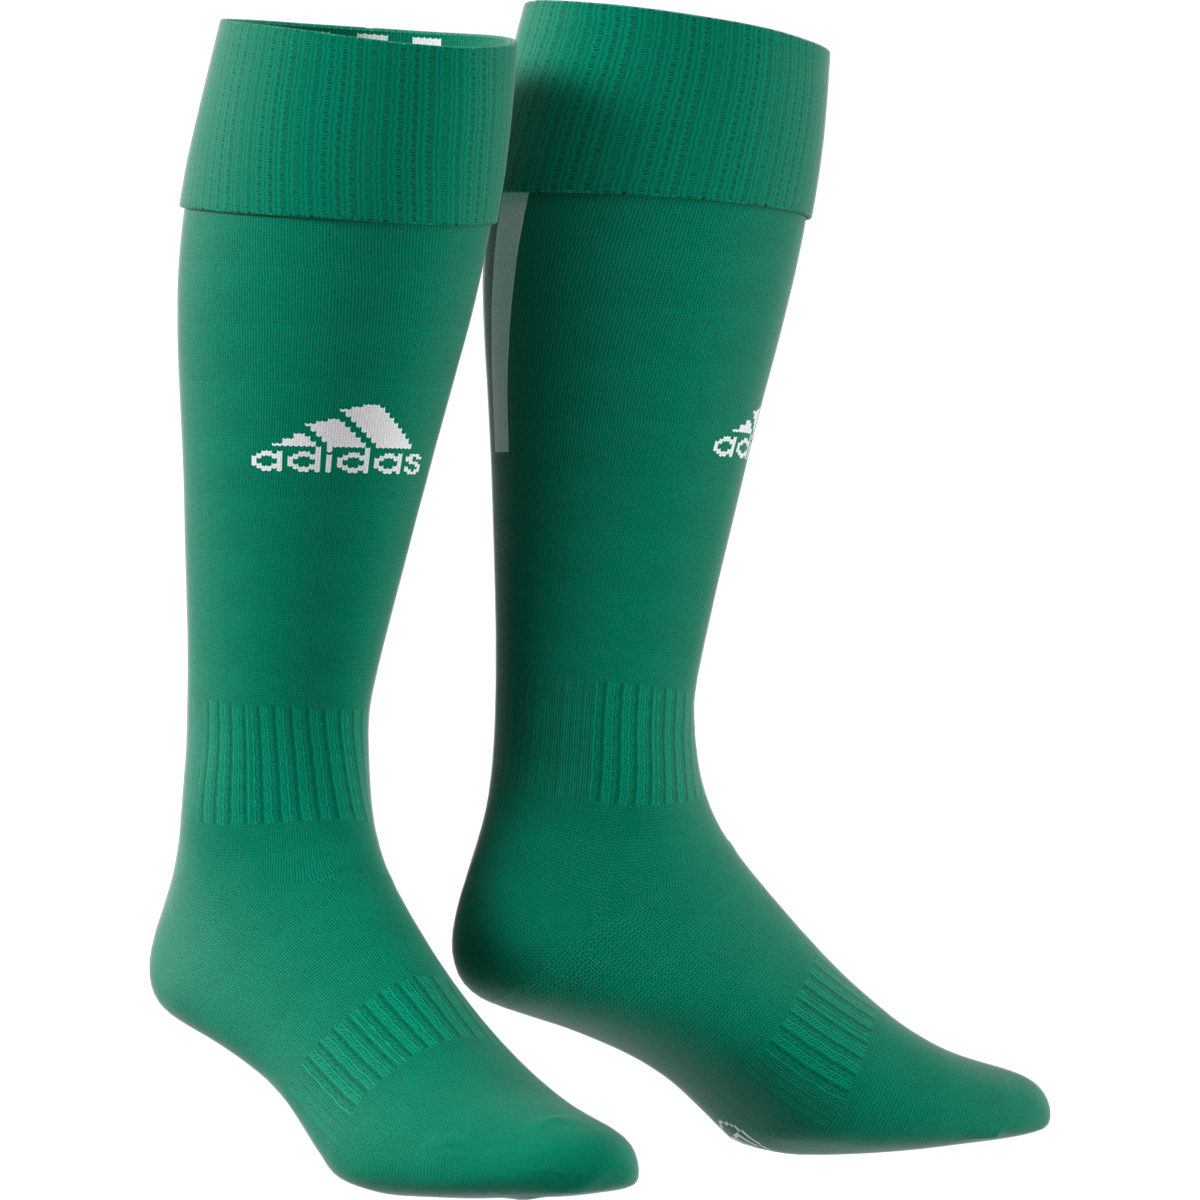 Adidas Santos 18 zelená/bílá EU 43/45